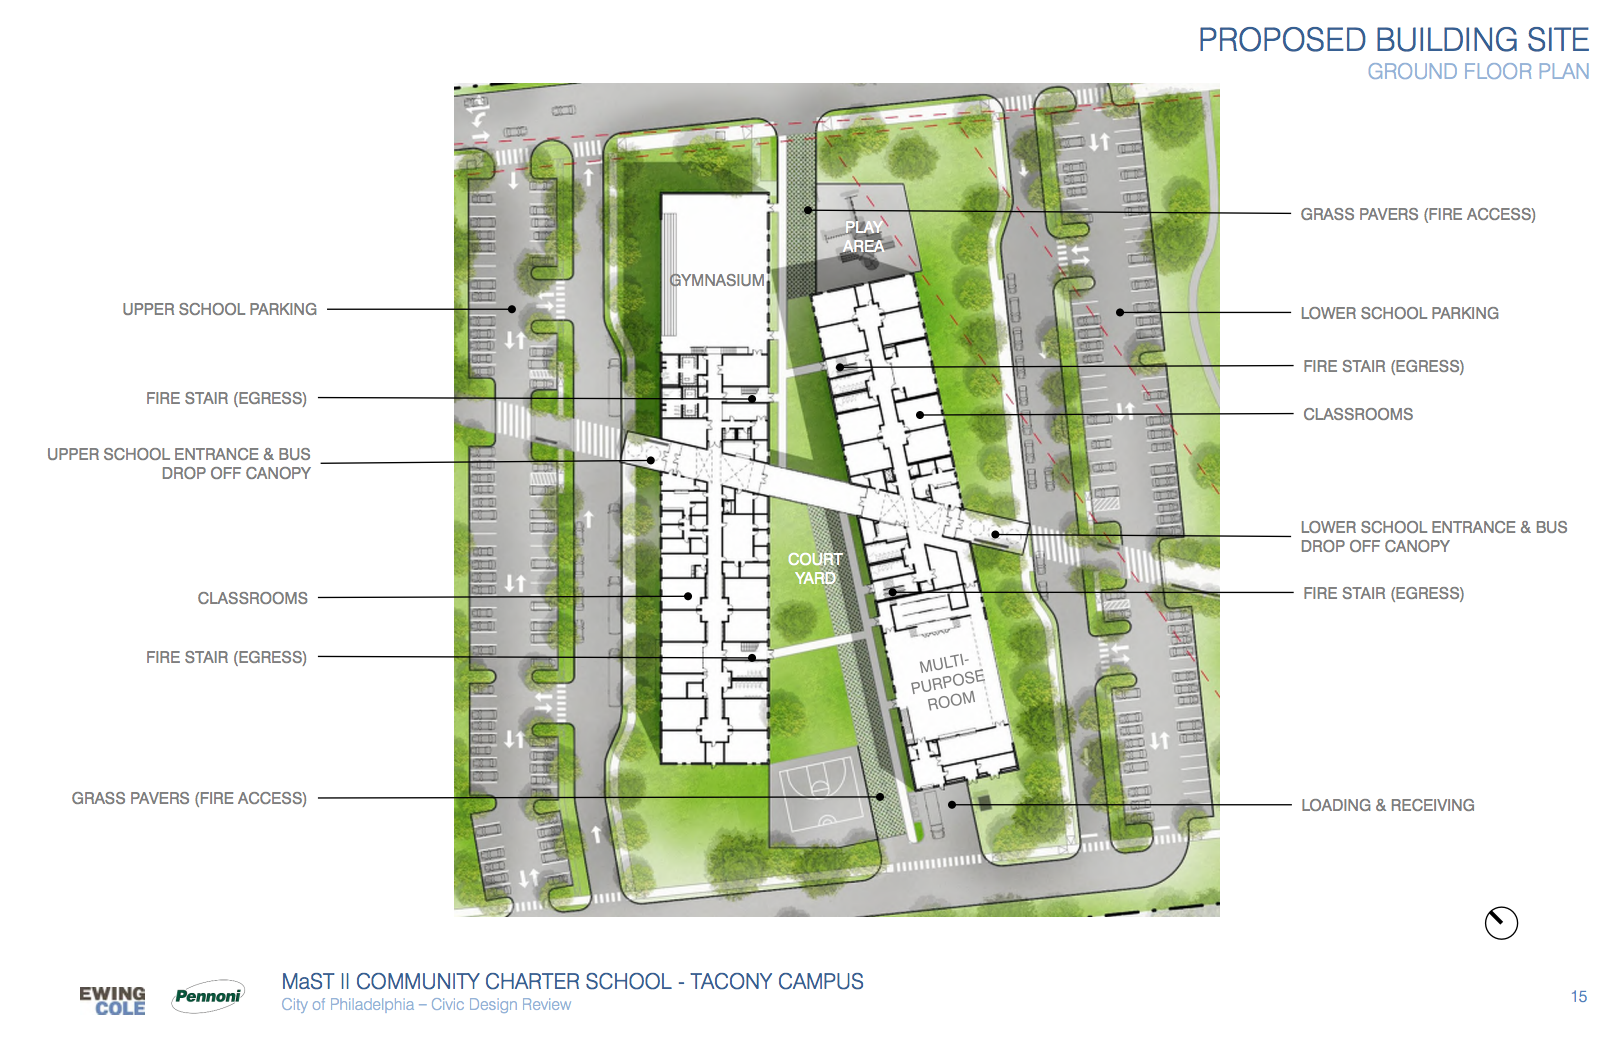 MaST II Community Charter School ground floor building plan | Ewing Cole